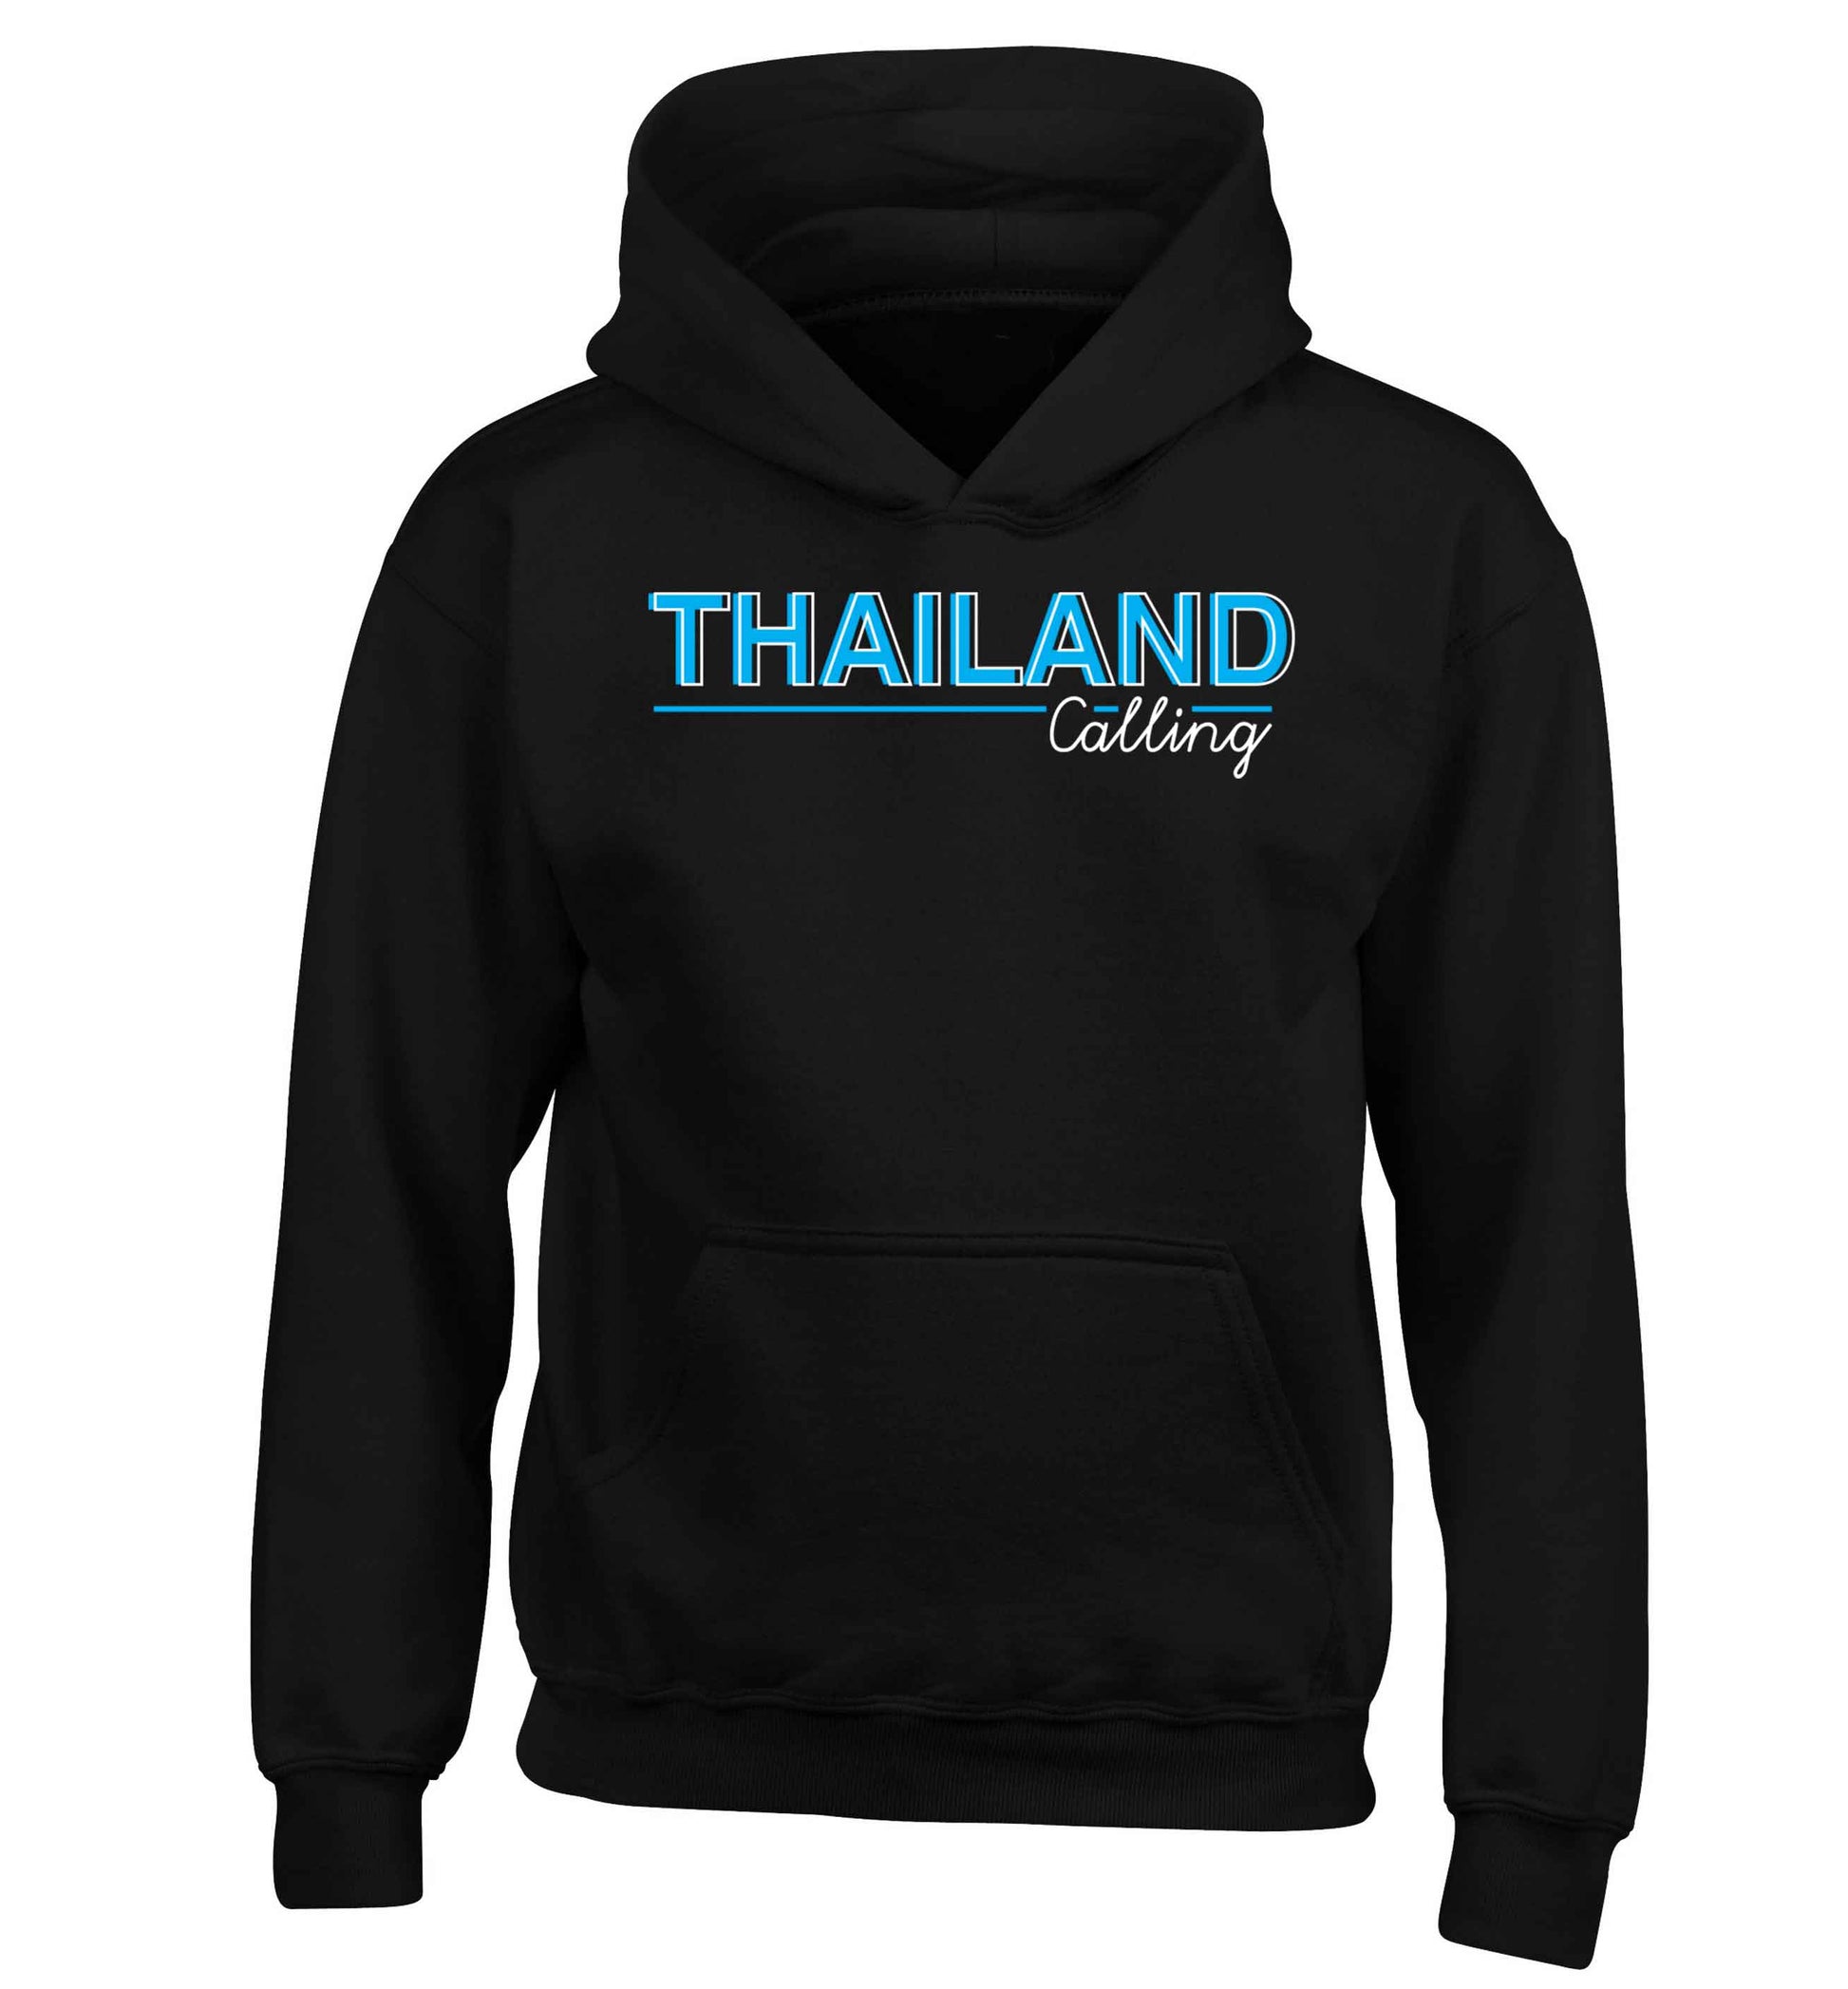 Thailand calling children's black hoodie 12-13 Years